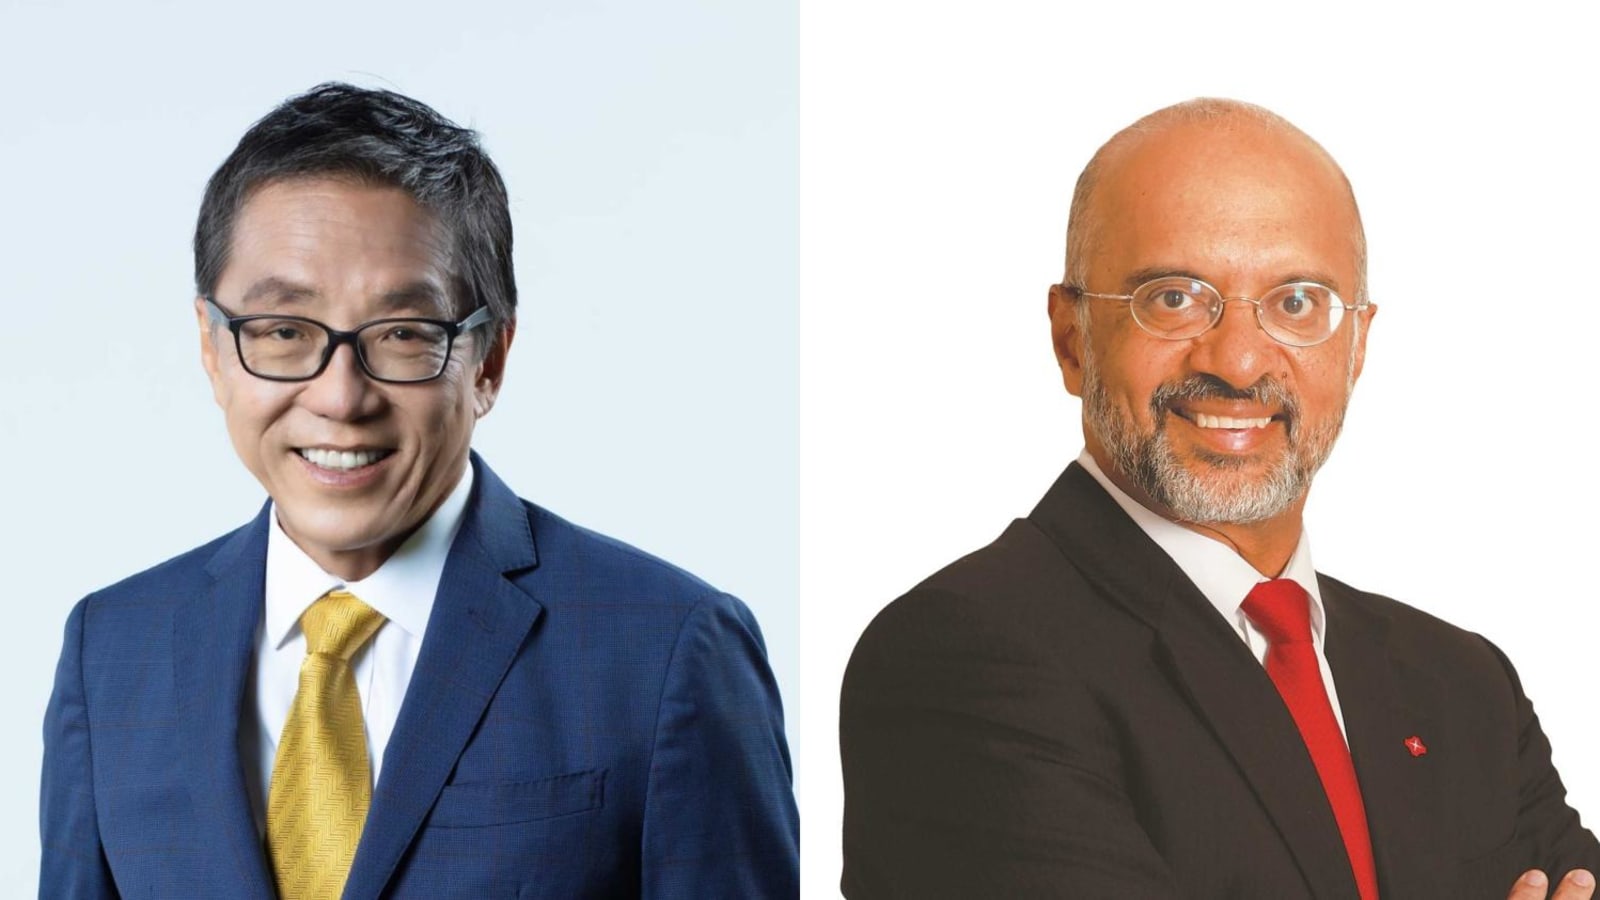 SMU’s founding chairman Ho Kwon Ping to step down next year, DBS CEO Piyush Gupta to succeed him